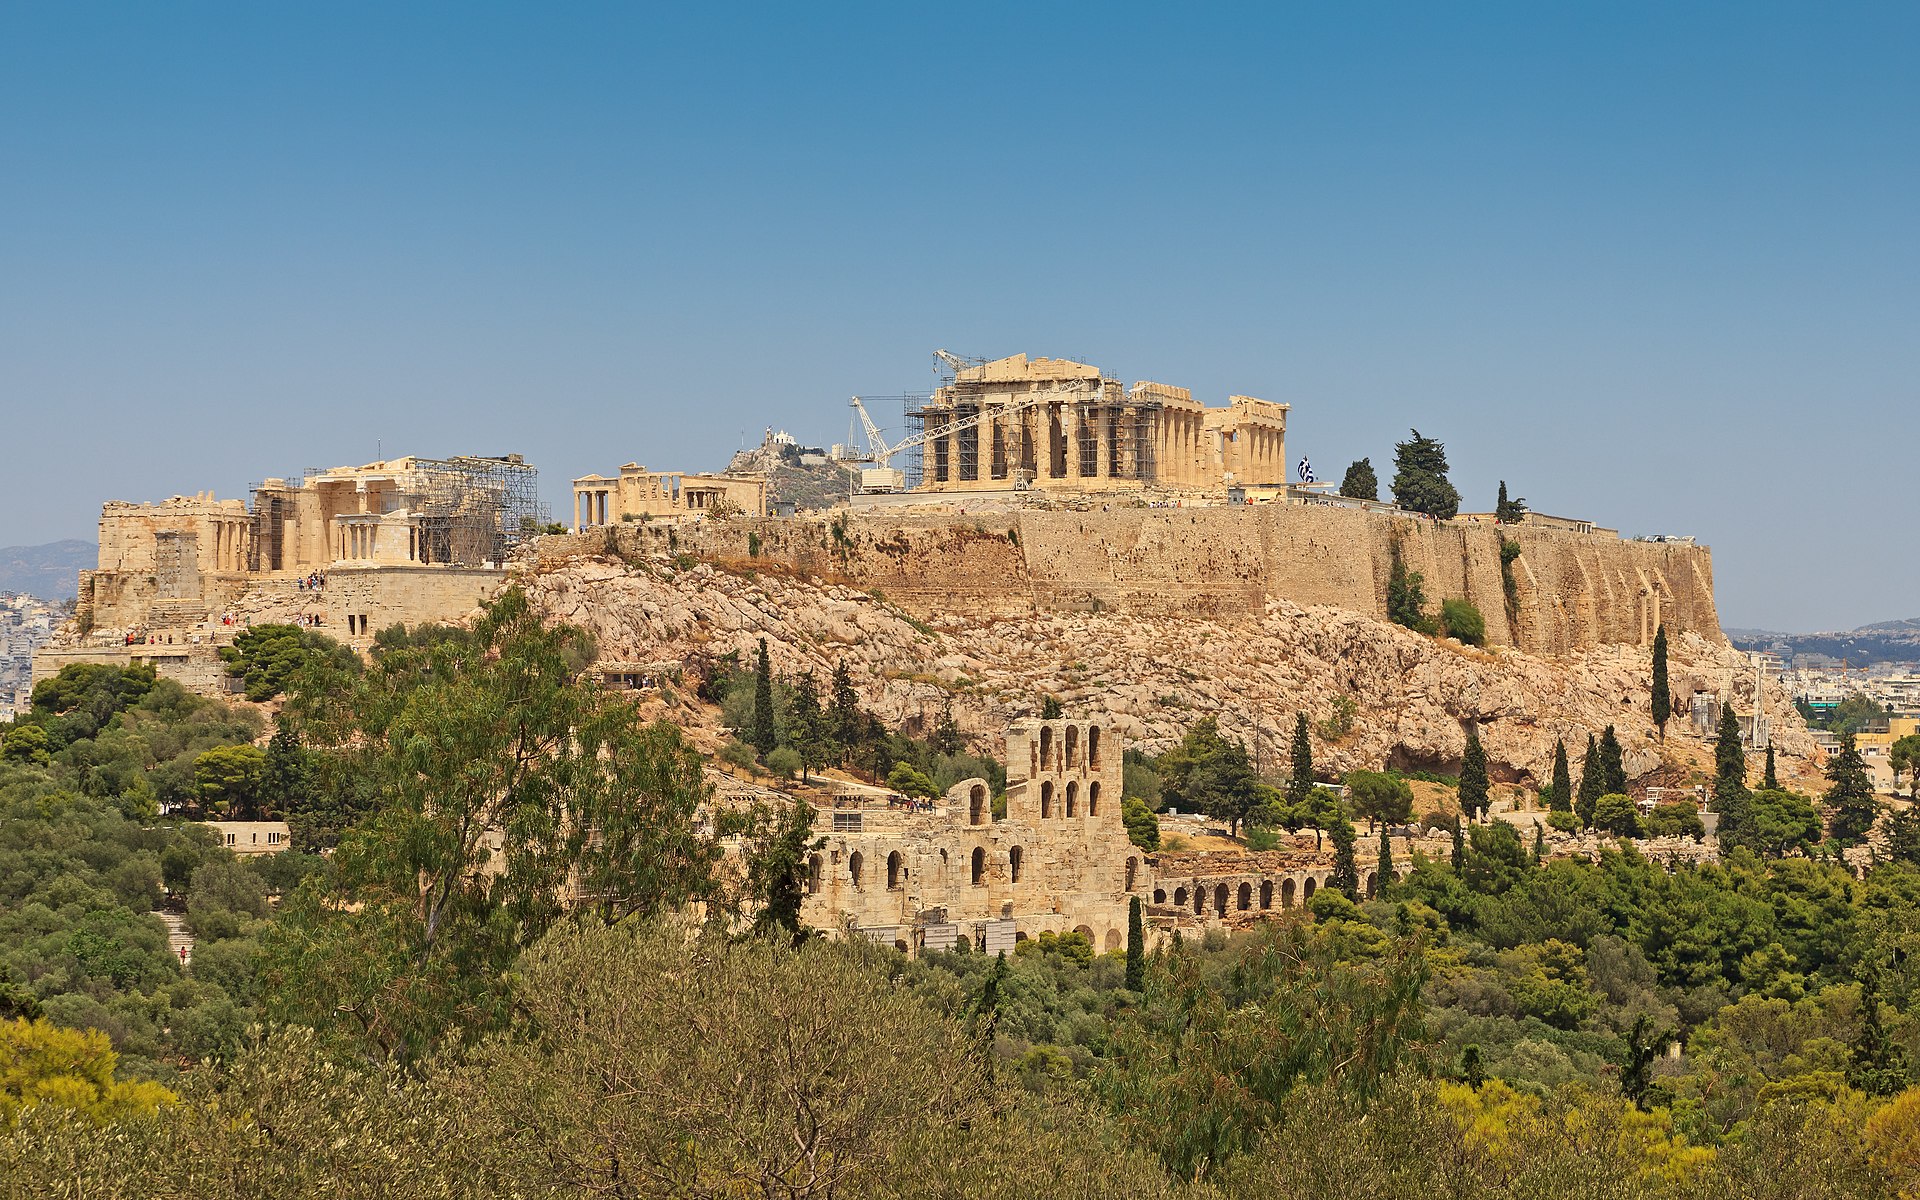 https://de.wikipedia.org/wiki/Akropolis_(Athen)#/media/Datei:Attica_06